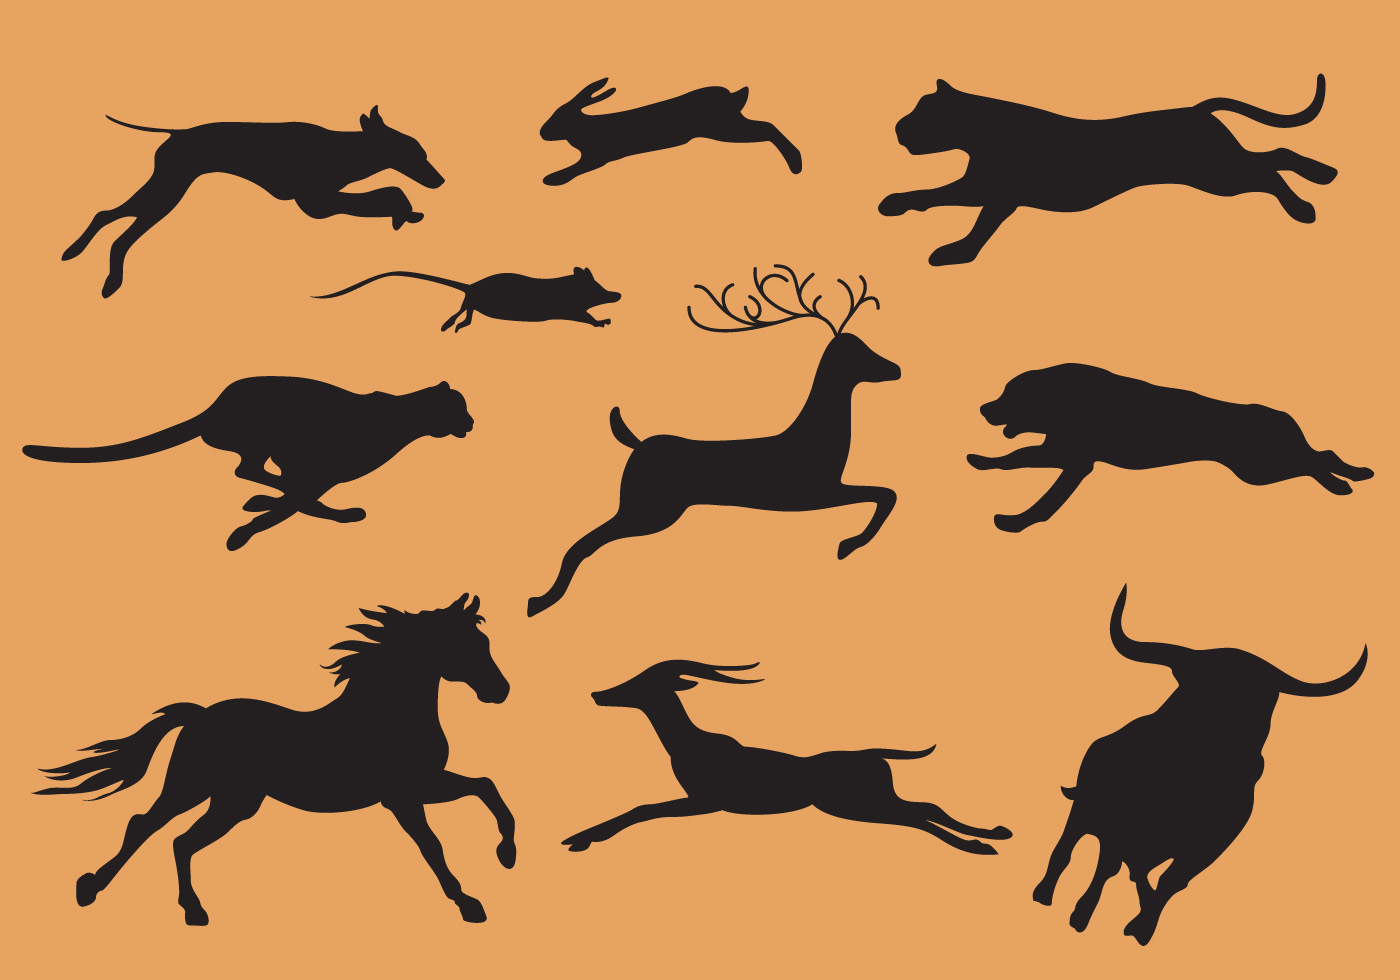 Download Animals Running Silhouette Vectors - Download Free Vector Art, Stock Graphics & Images